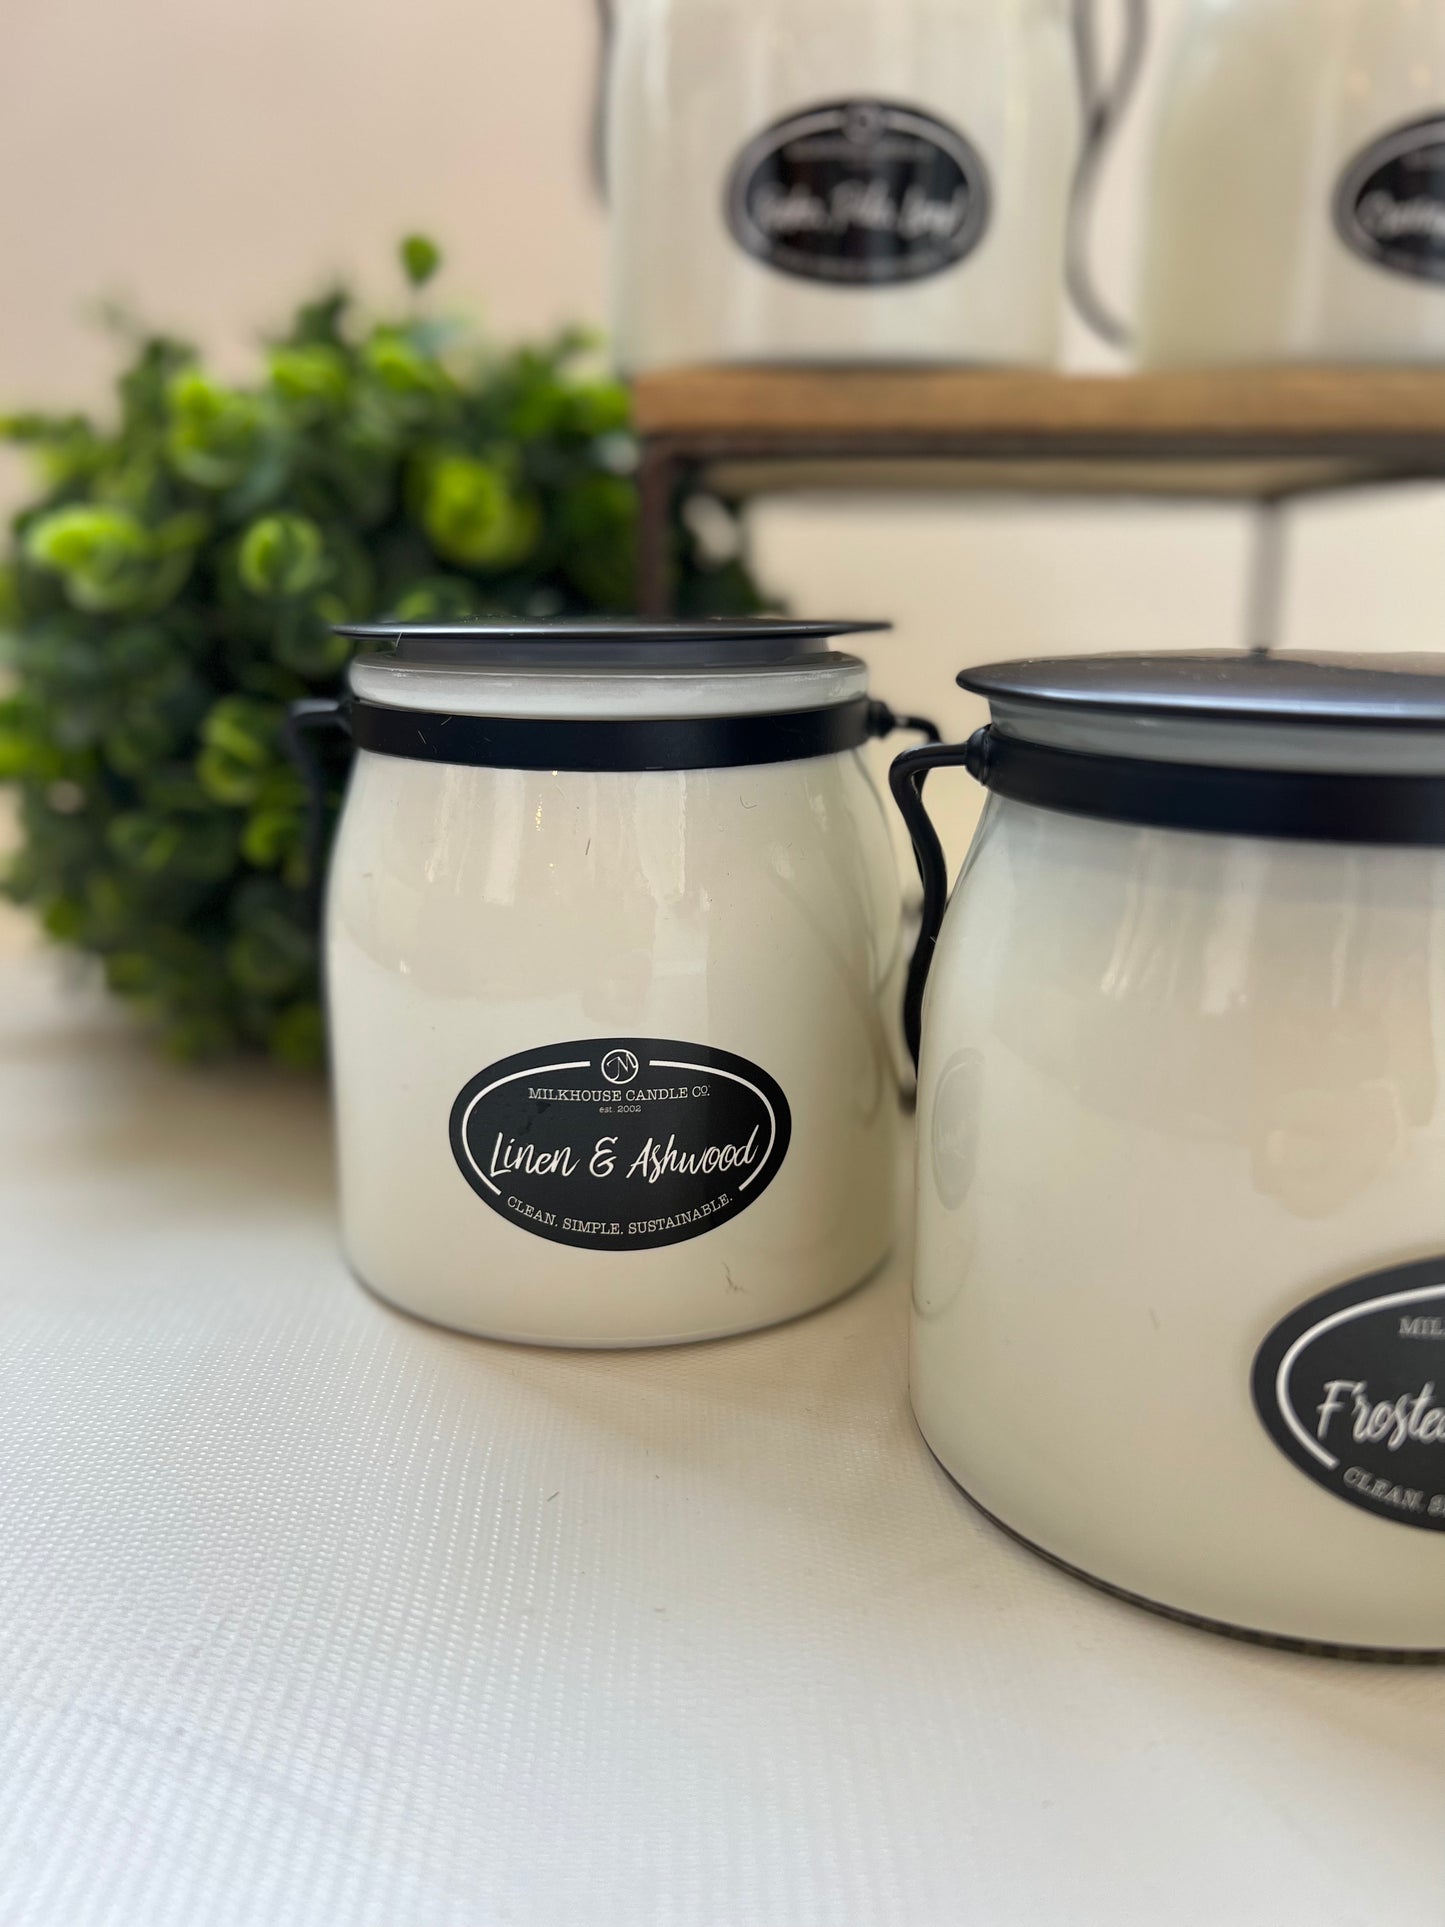 Milkhouse Candle -16 Oz Butter Jar